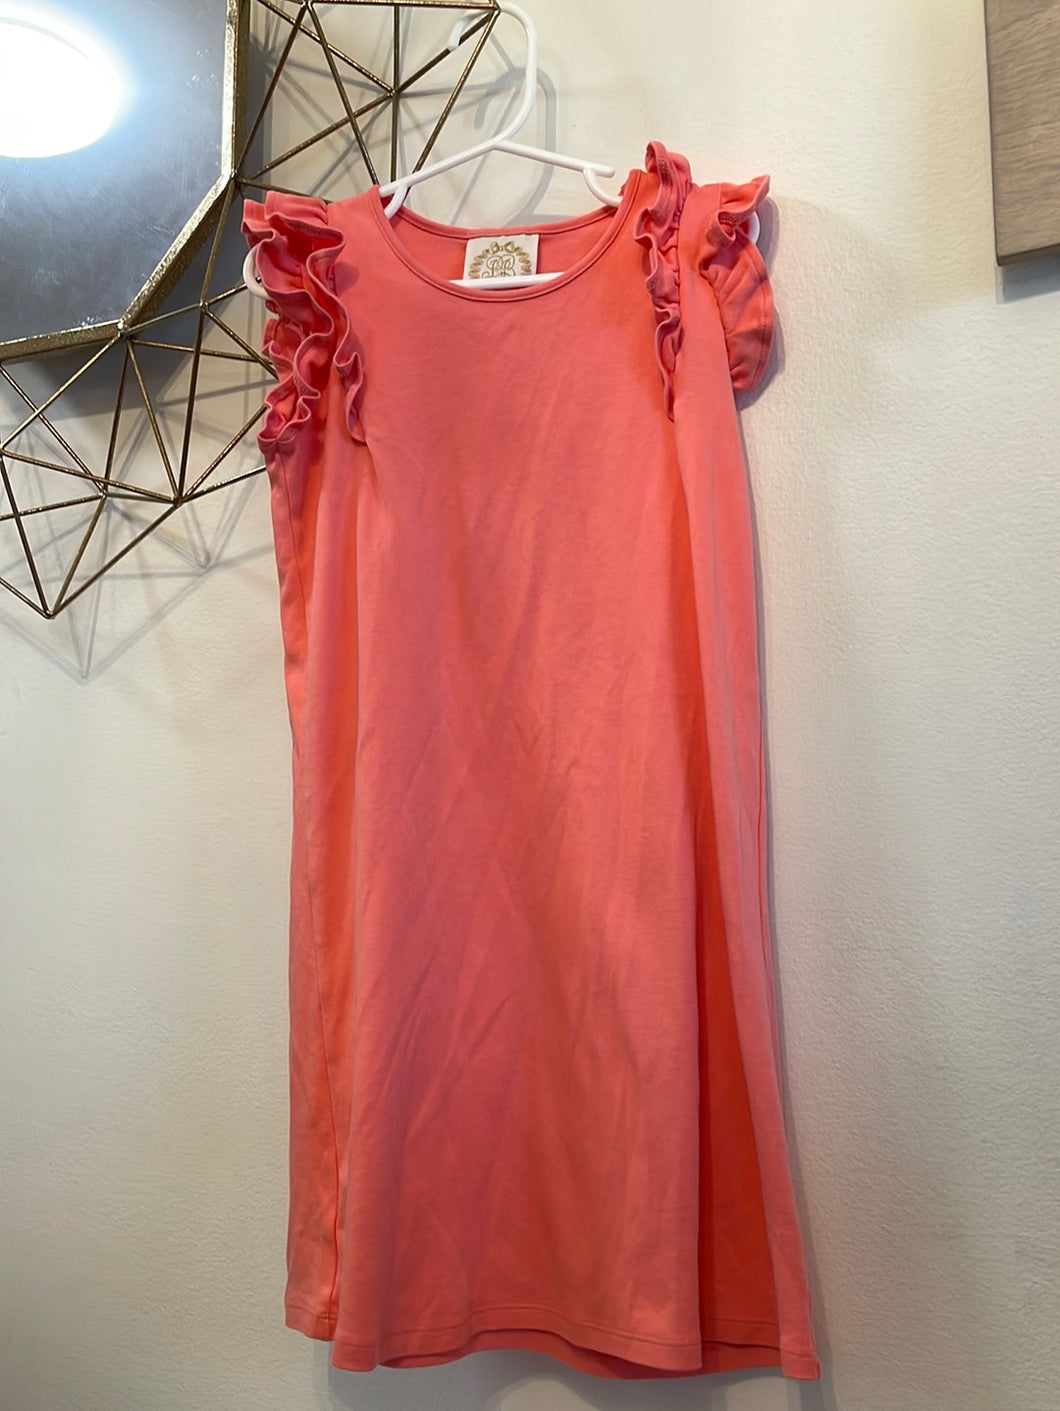 TBBC size 10 dress